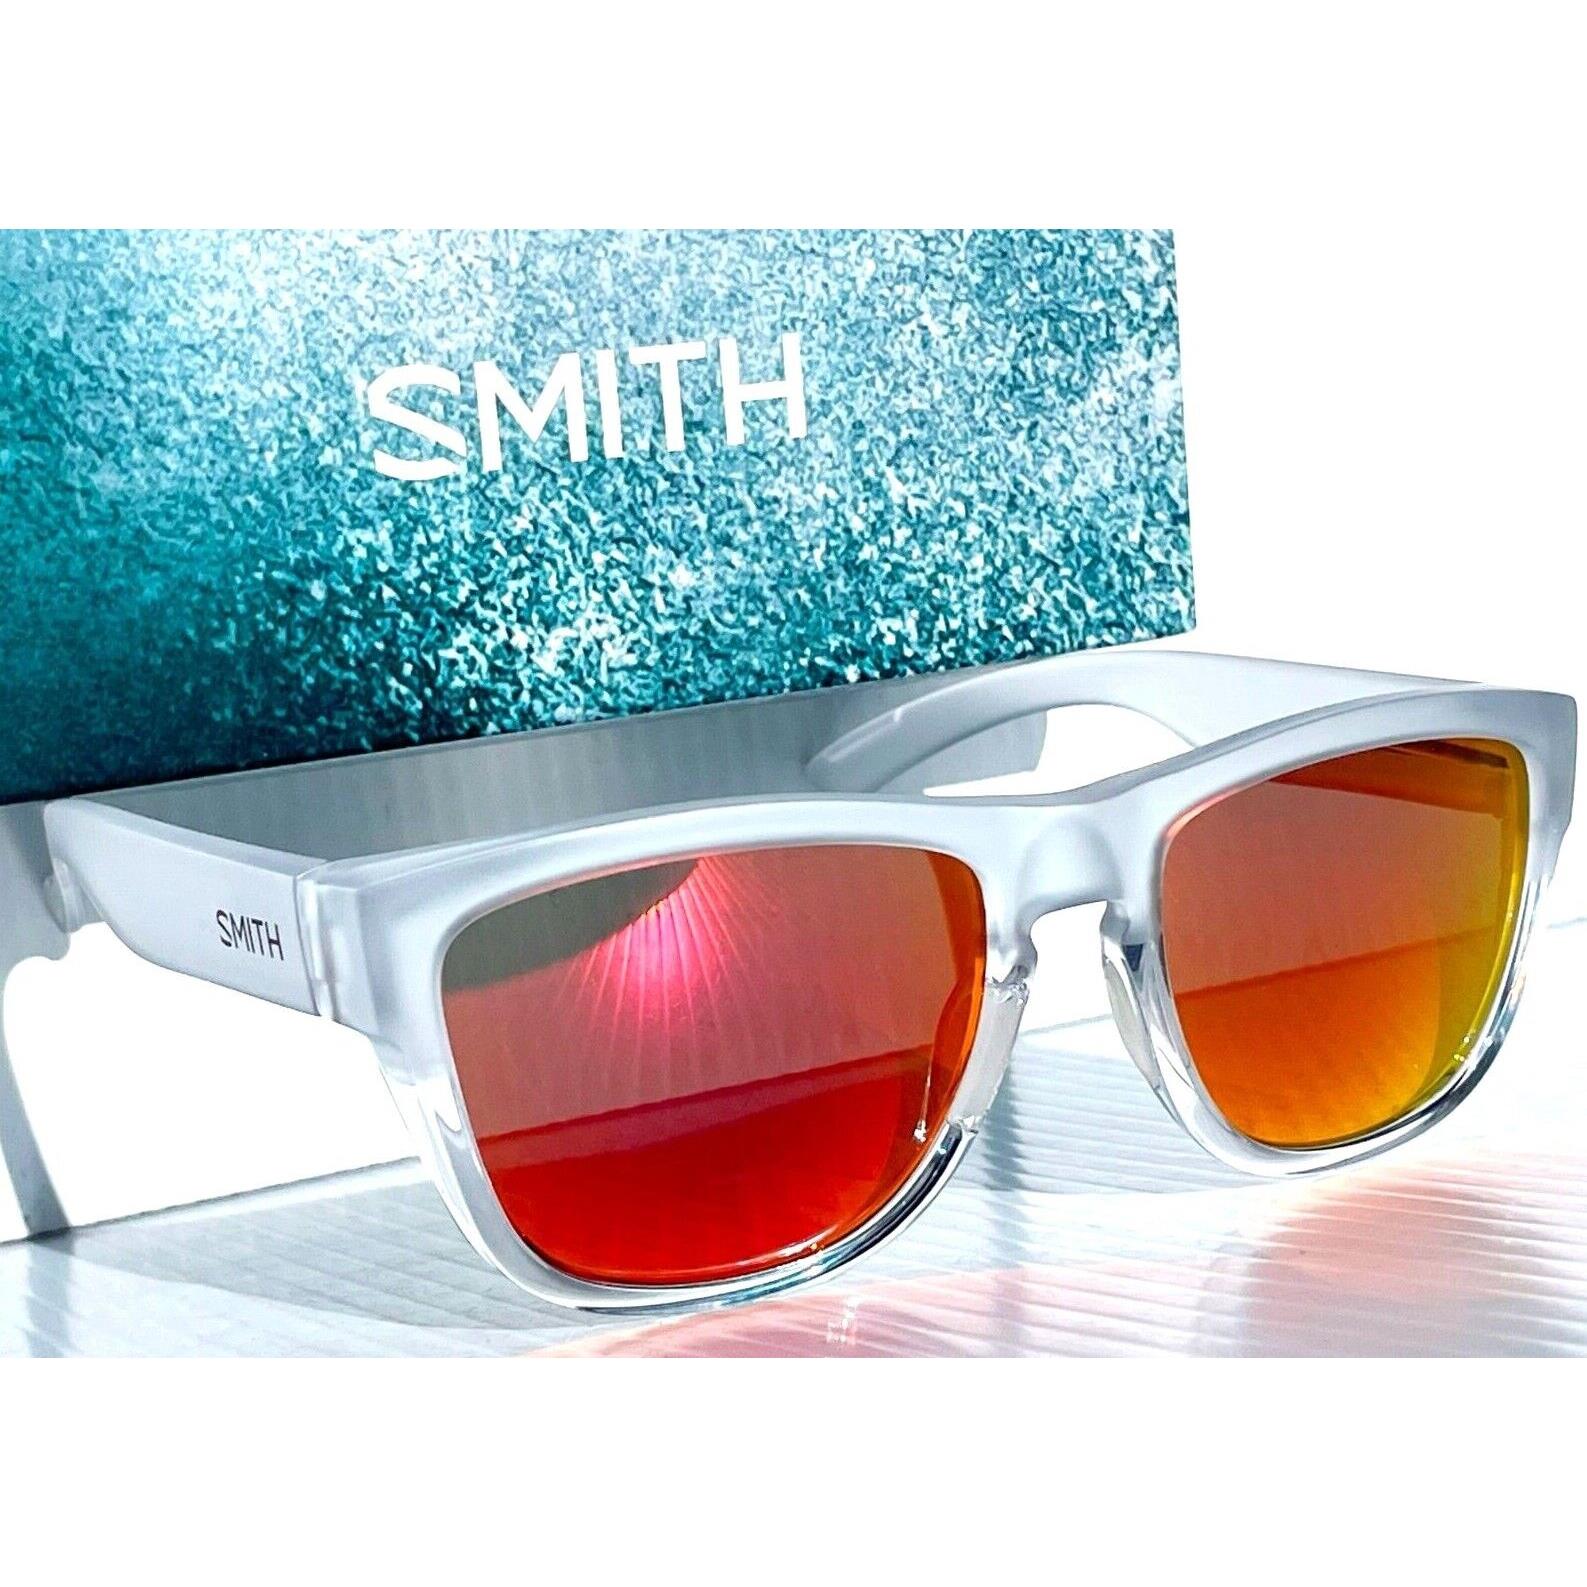 Smith Optics sunglasses Optic Clark - Matte Clear Frame, Red Lens 5